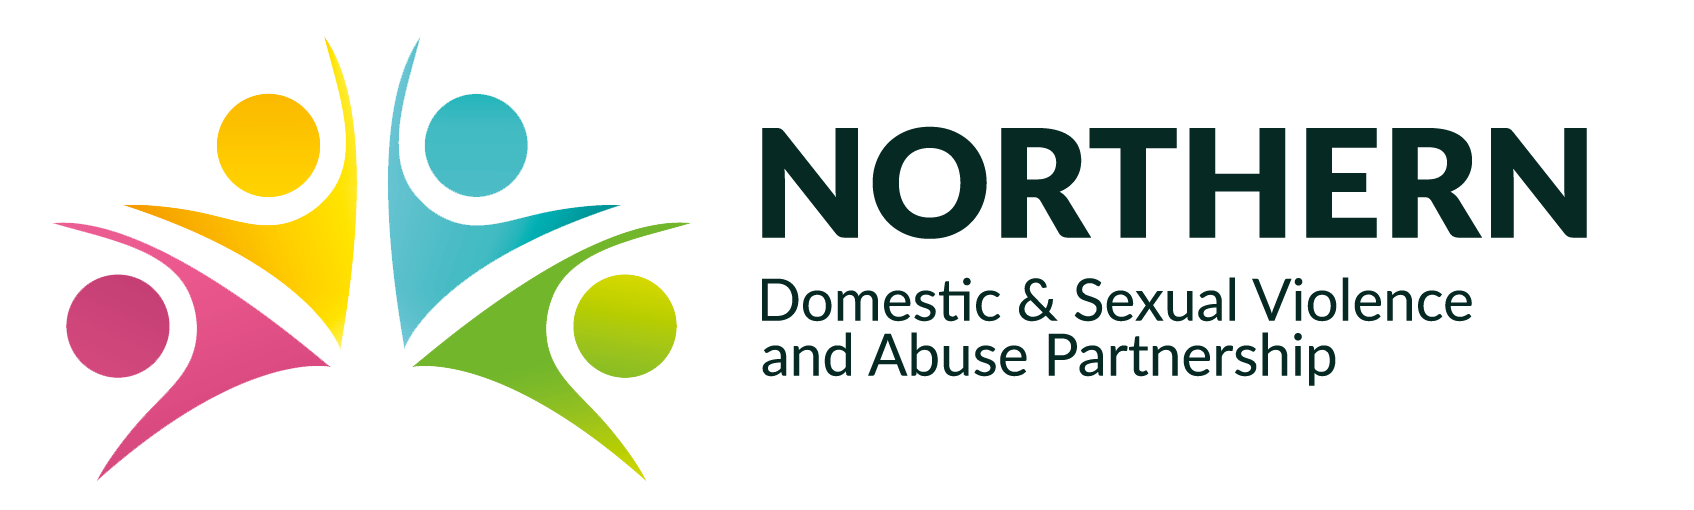 Northern Domestic & Sexual Violence Partnership